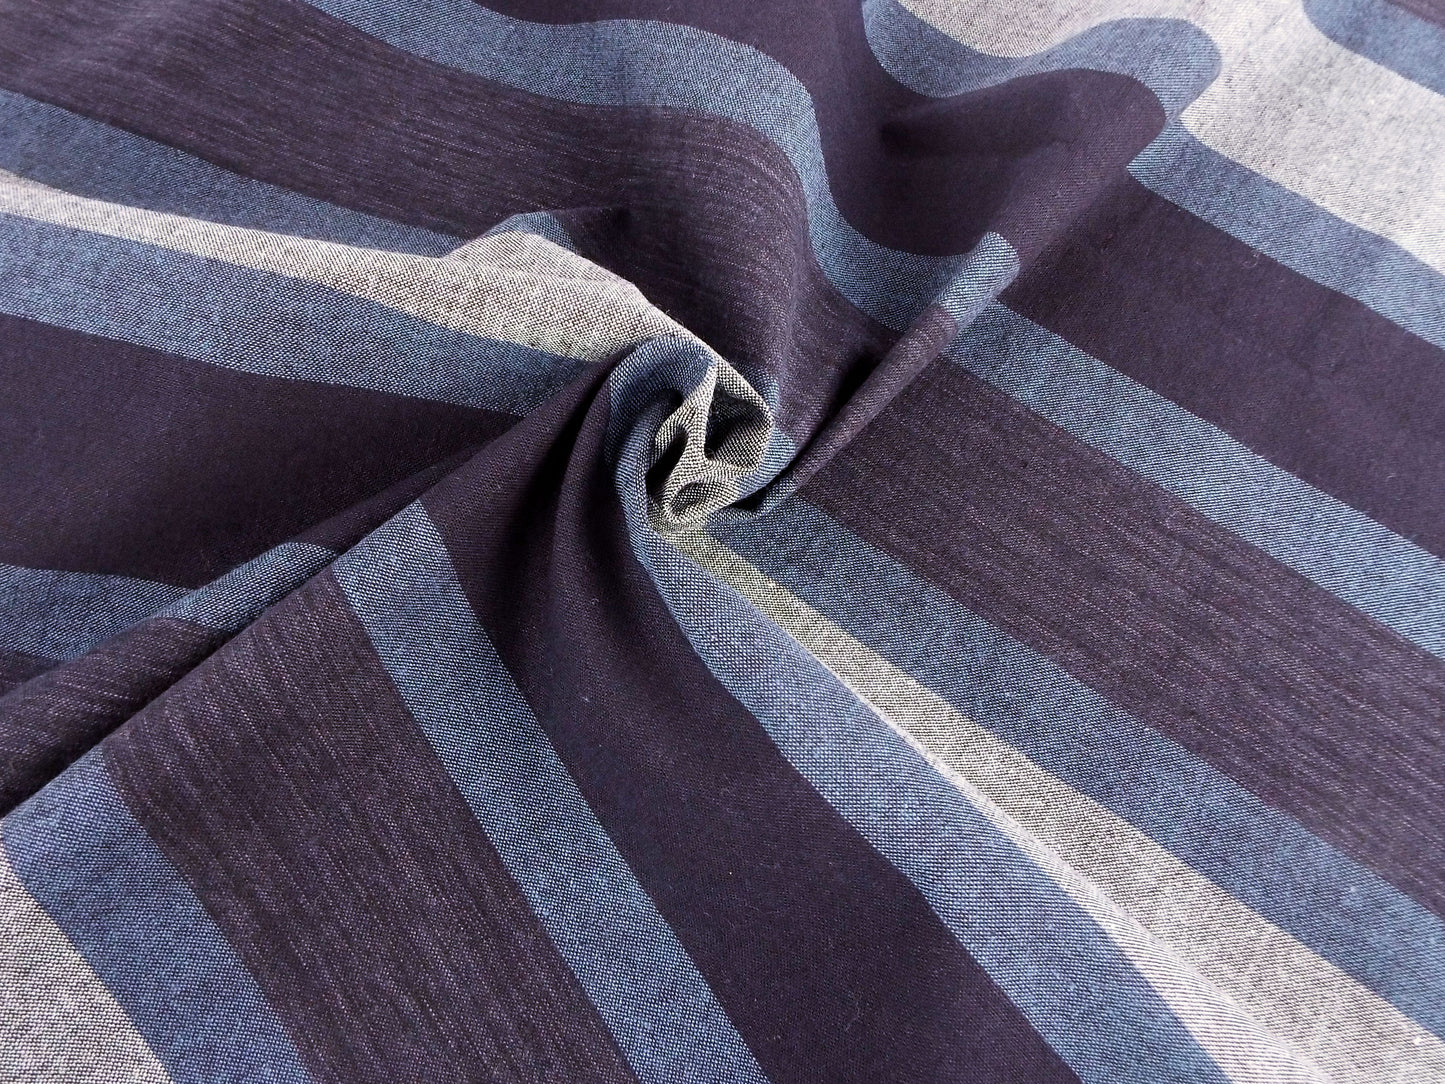 Kameda striped cotton fabric ordinary ground # 39 ABC 3 patterns